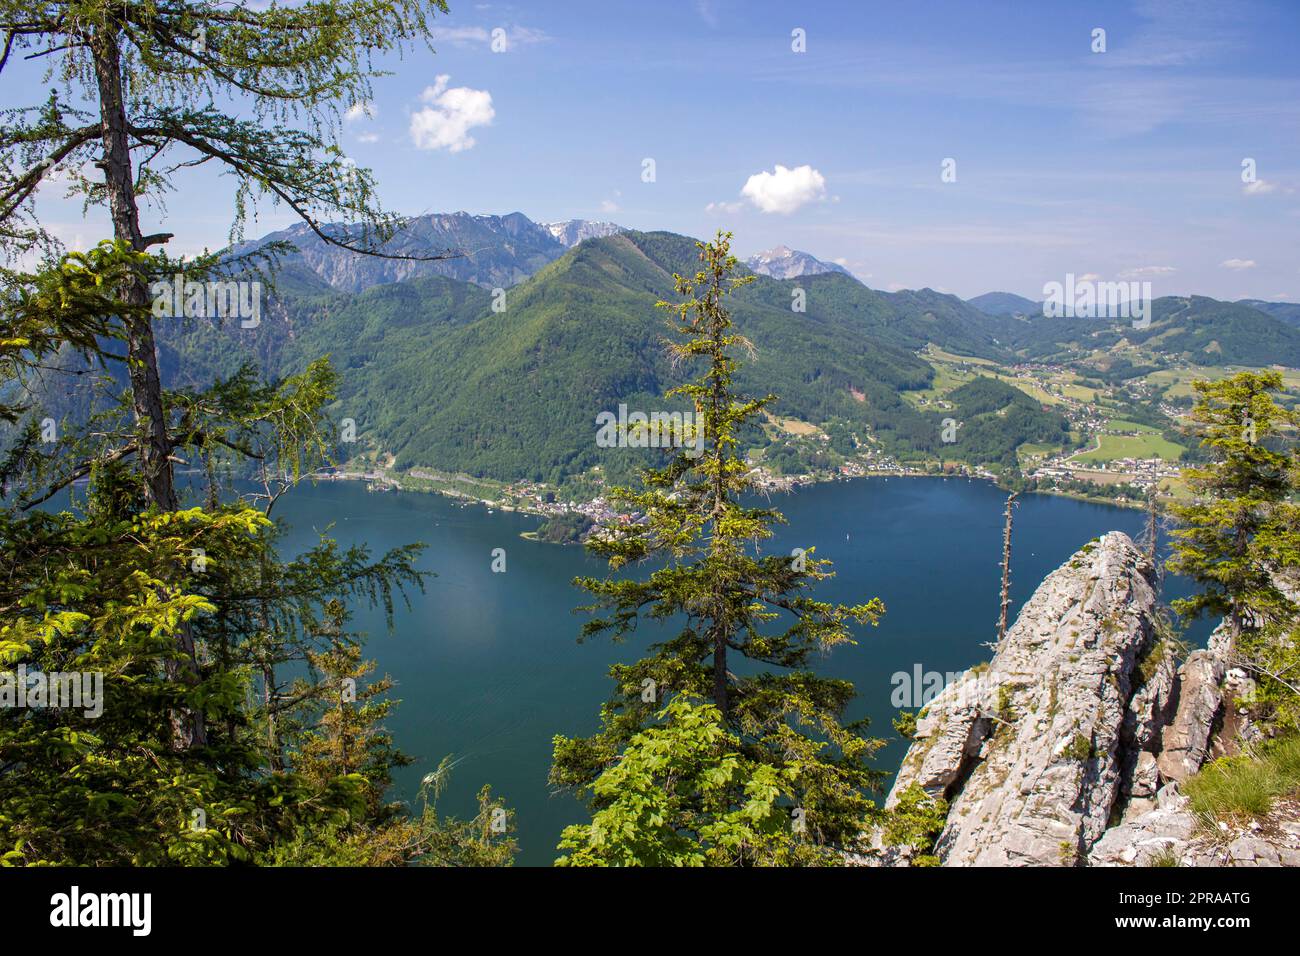 Traunsee lake with Alps seen from hill Kleiner Schonberg. Austria landscape. Austria Stock Photo